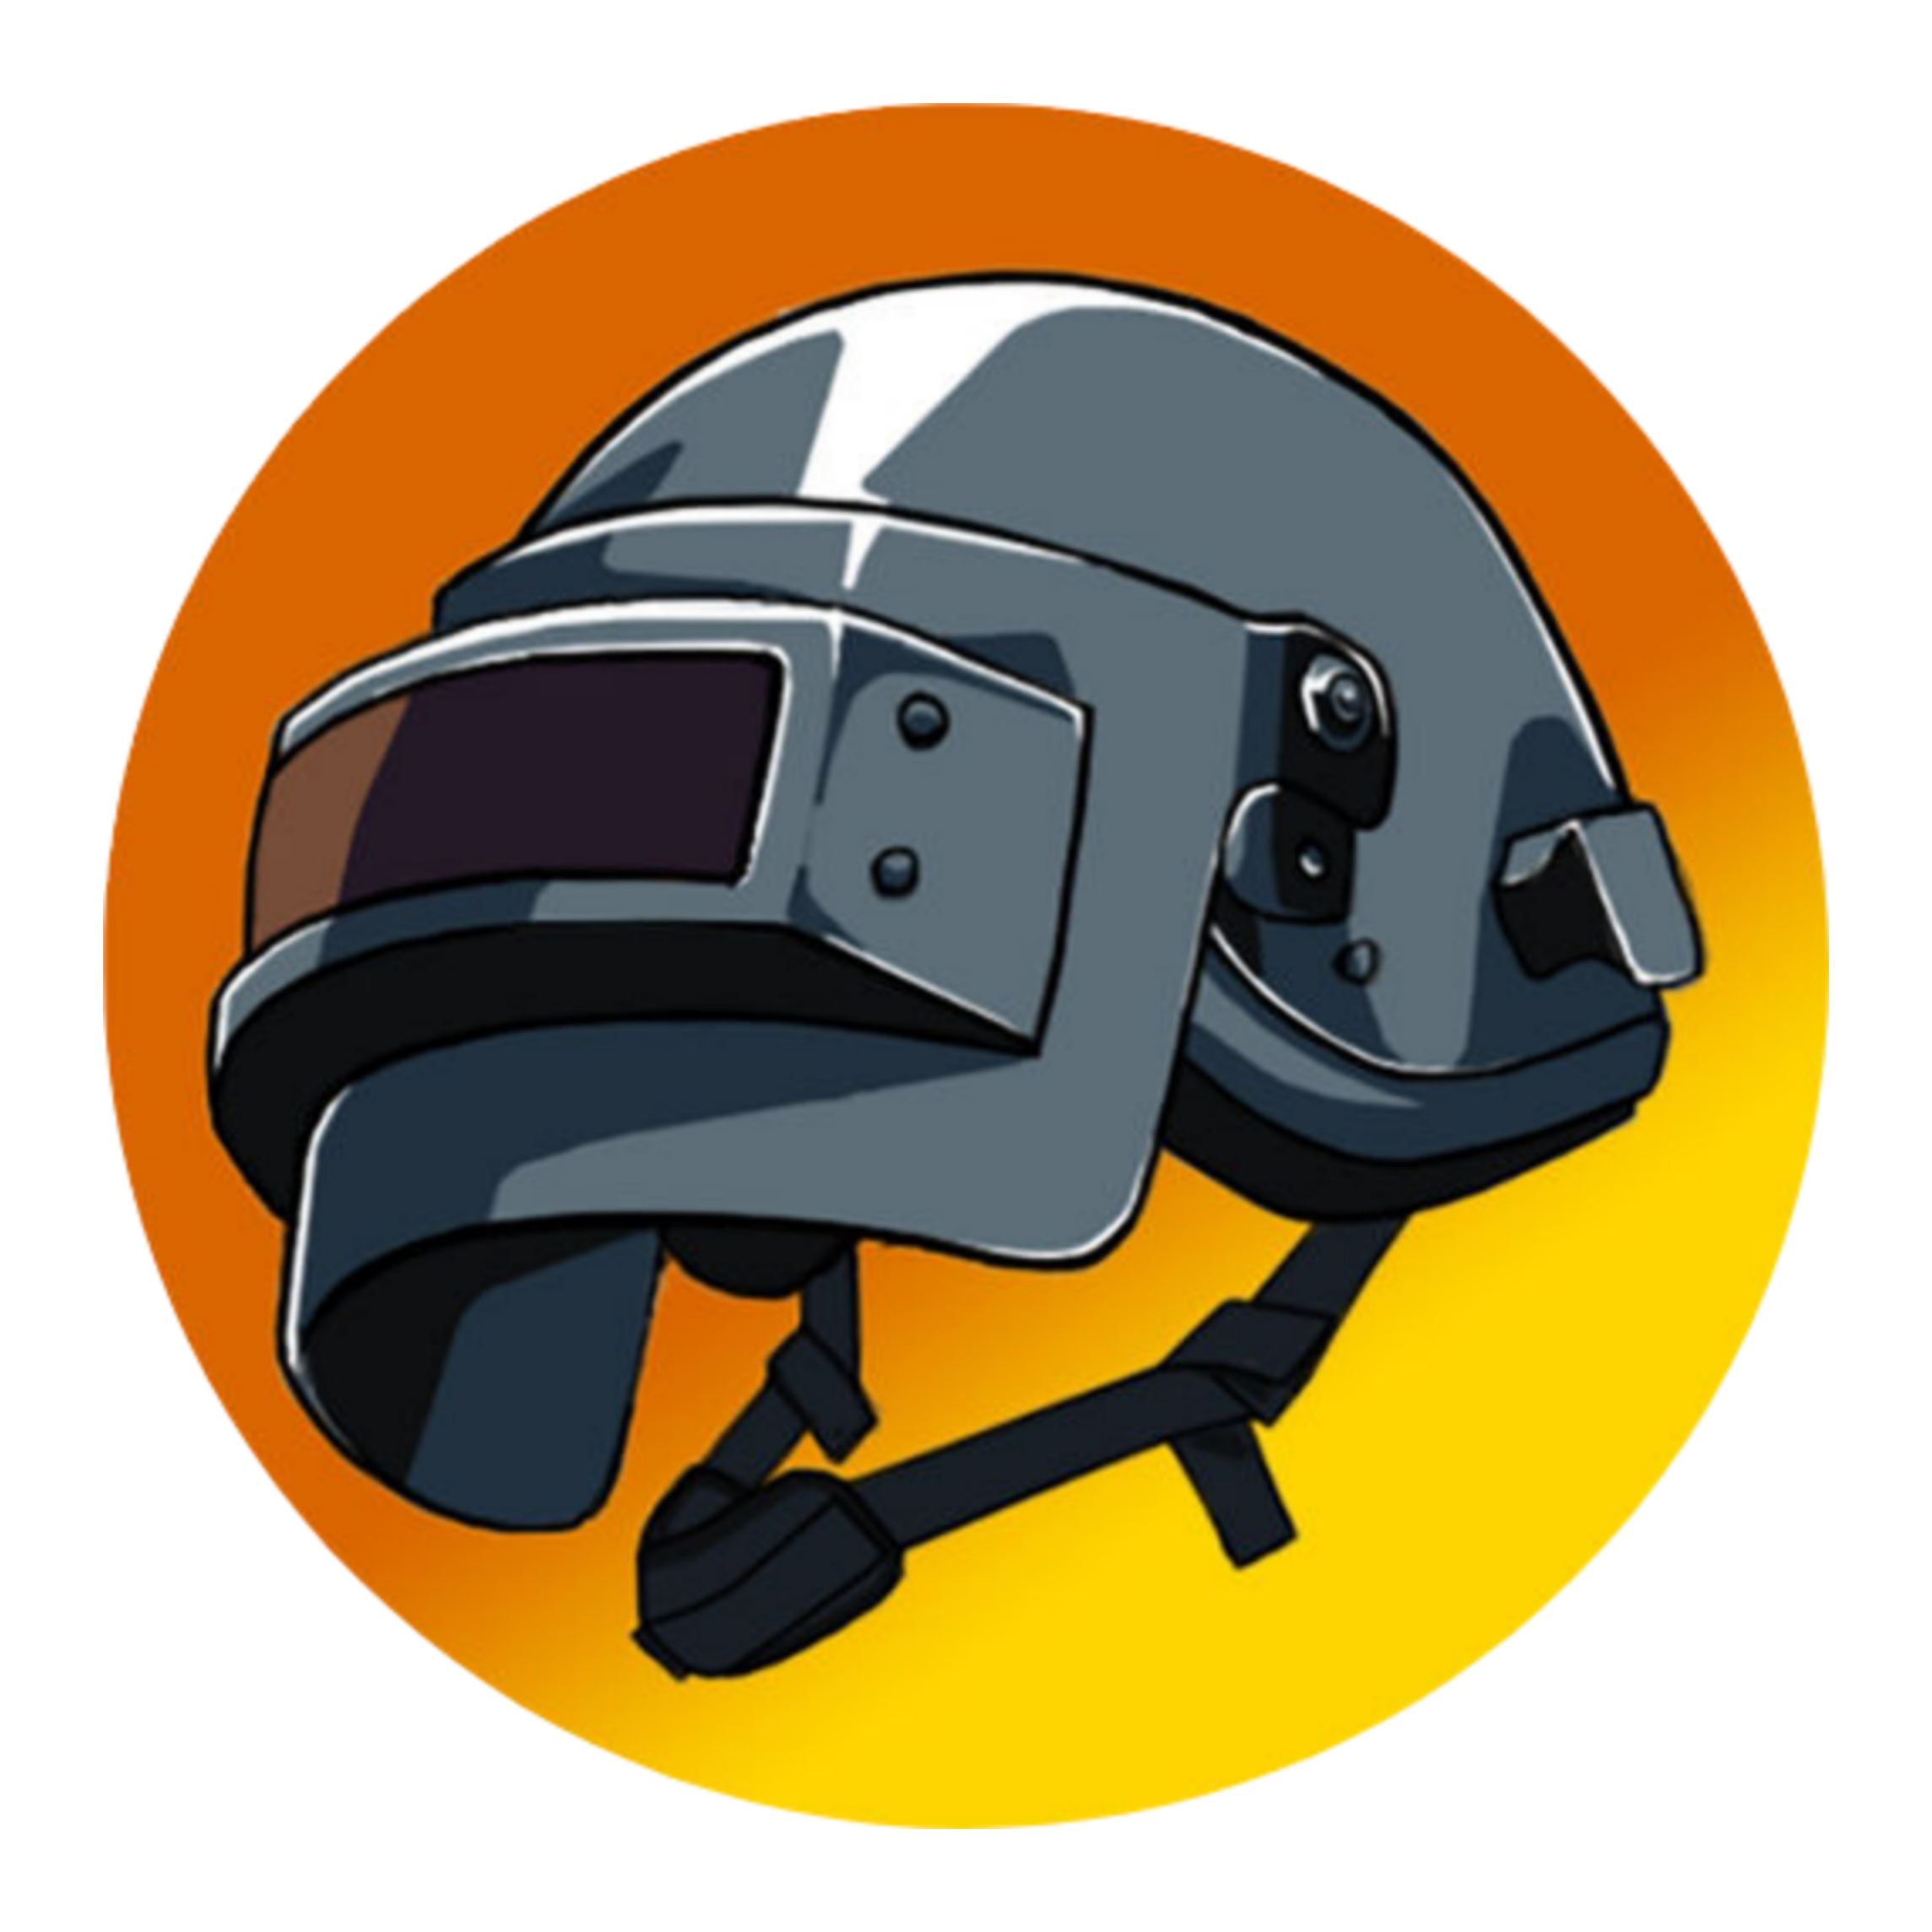 Ава папг. ПАБГ мобайл шлем. Логотип ПАБГ мобайл шлем. Аватар ПАБГ мобайл. PUBG mobile шлем.